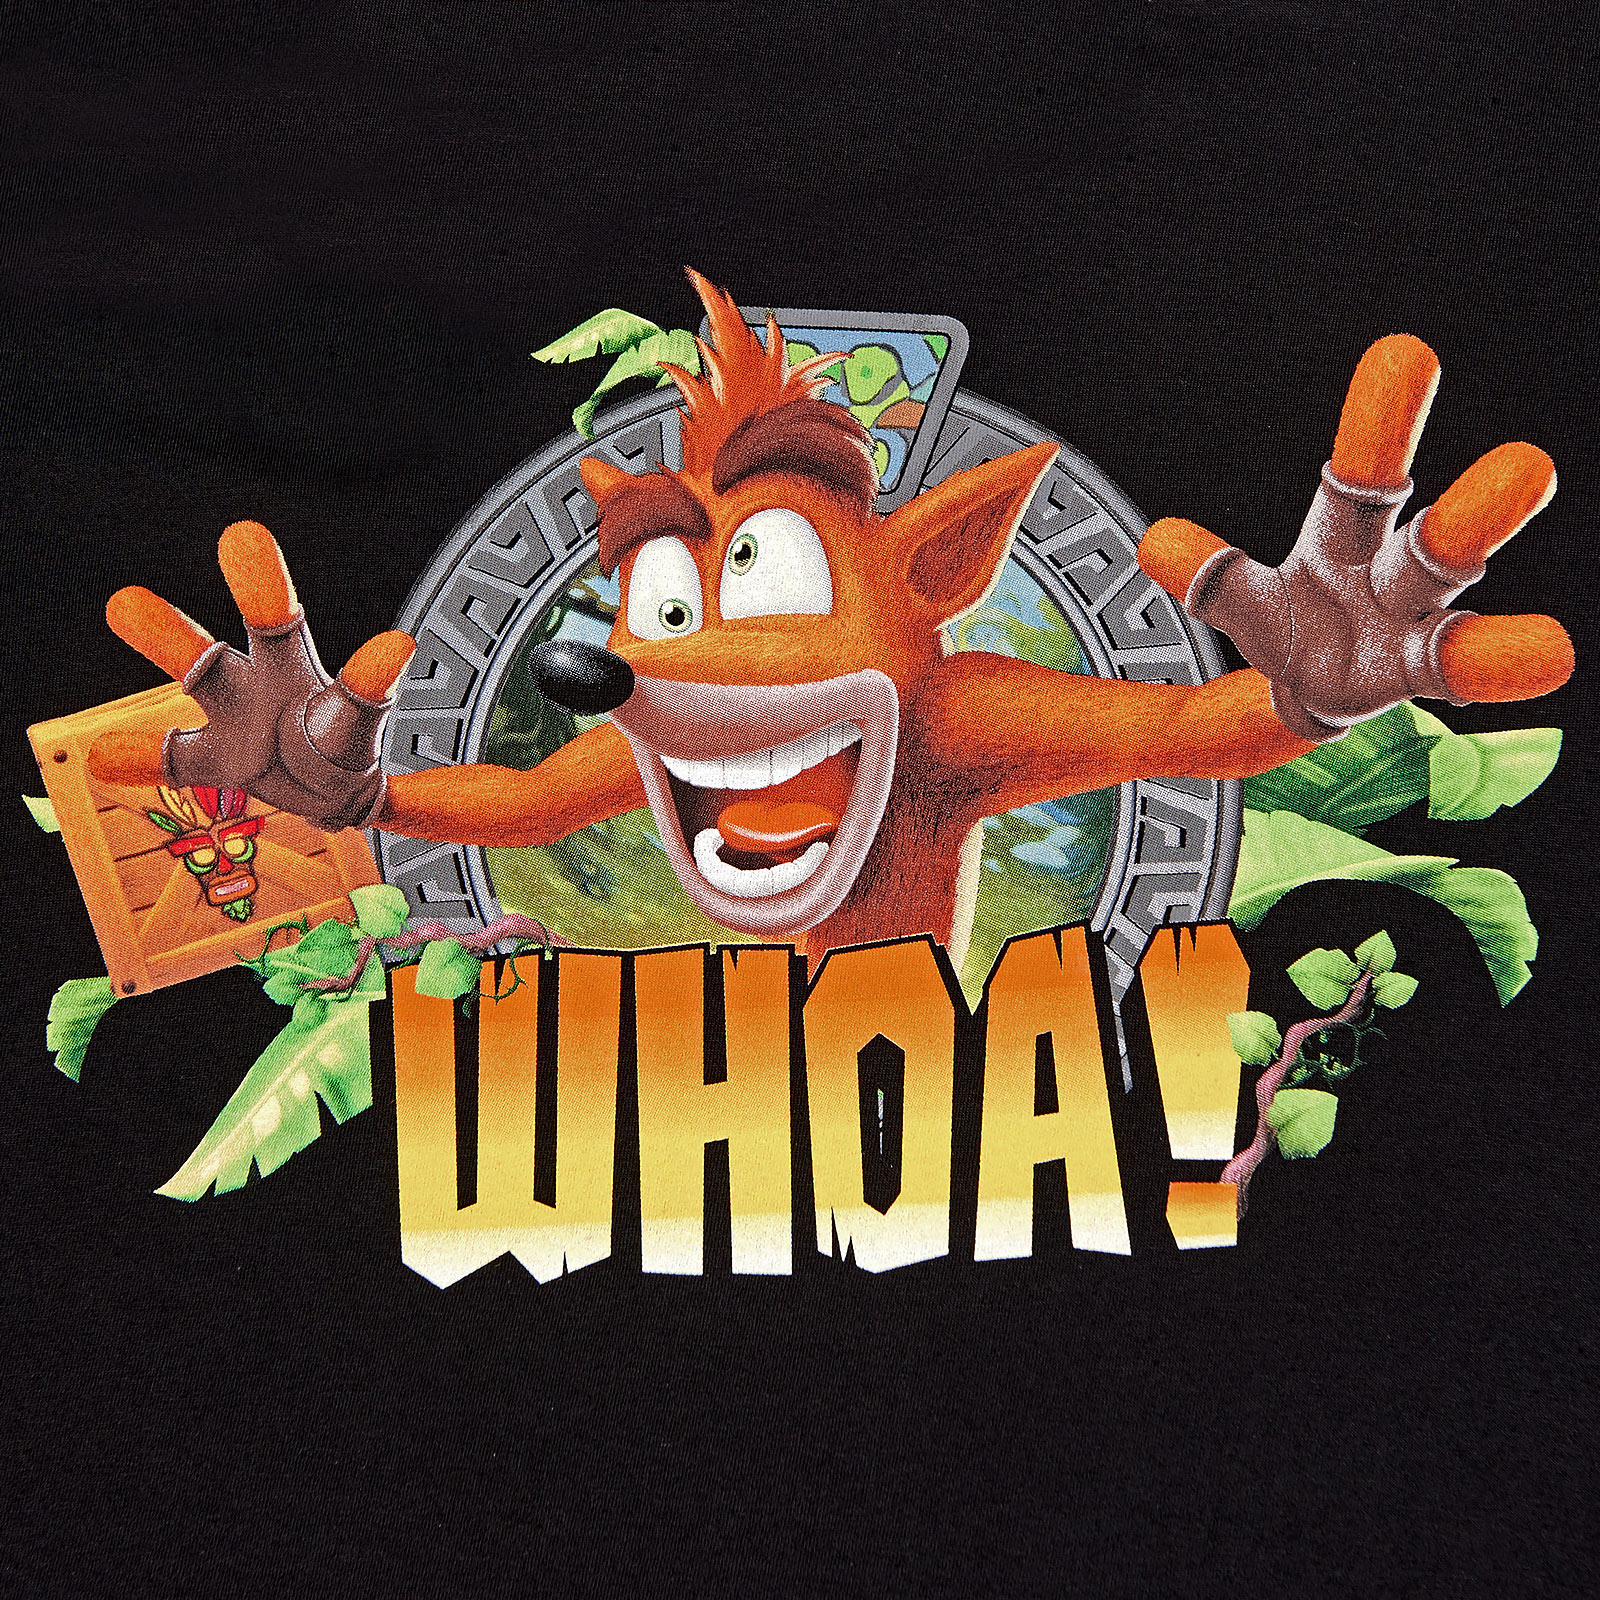 Crash Bandicoot - Whoa T-Shirt schwarz